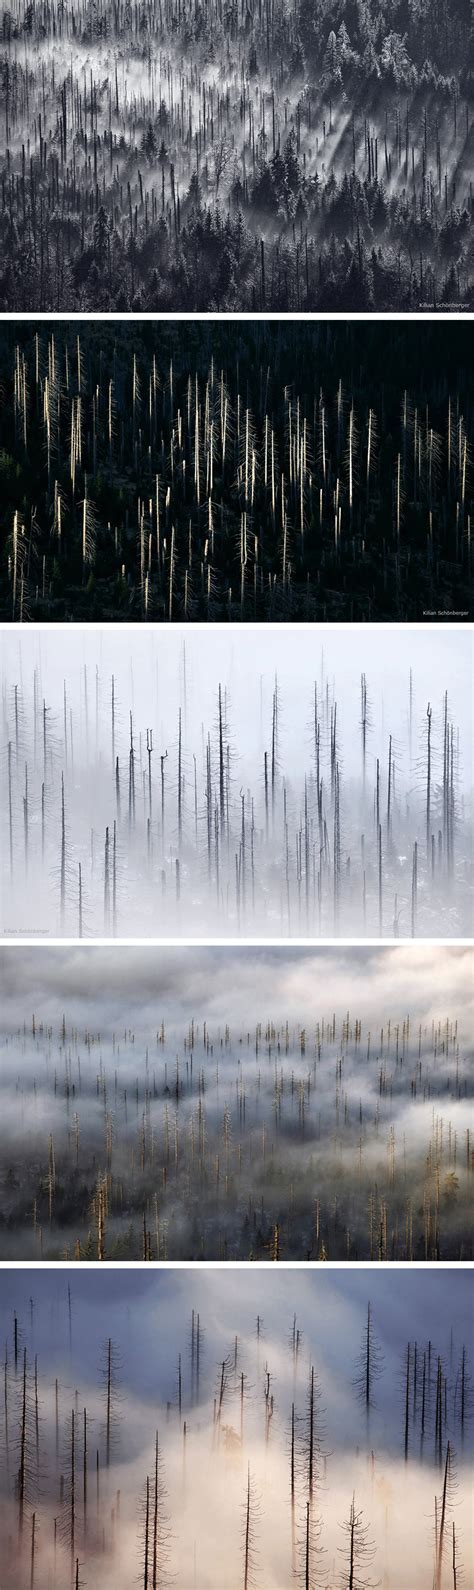 Landscape Photos Of The Misty Czech Bohemian Forest By Kilian